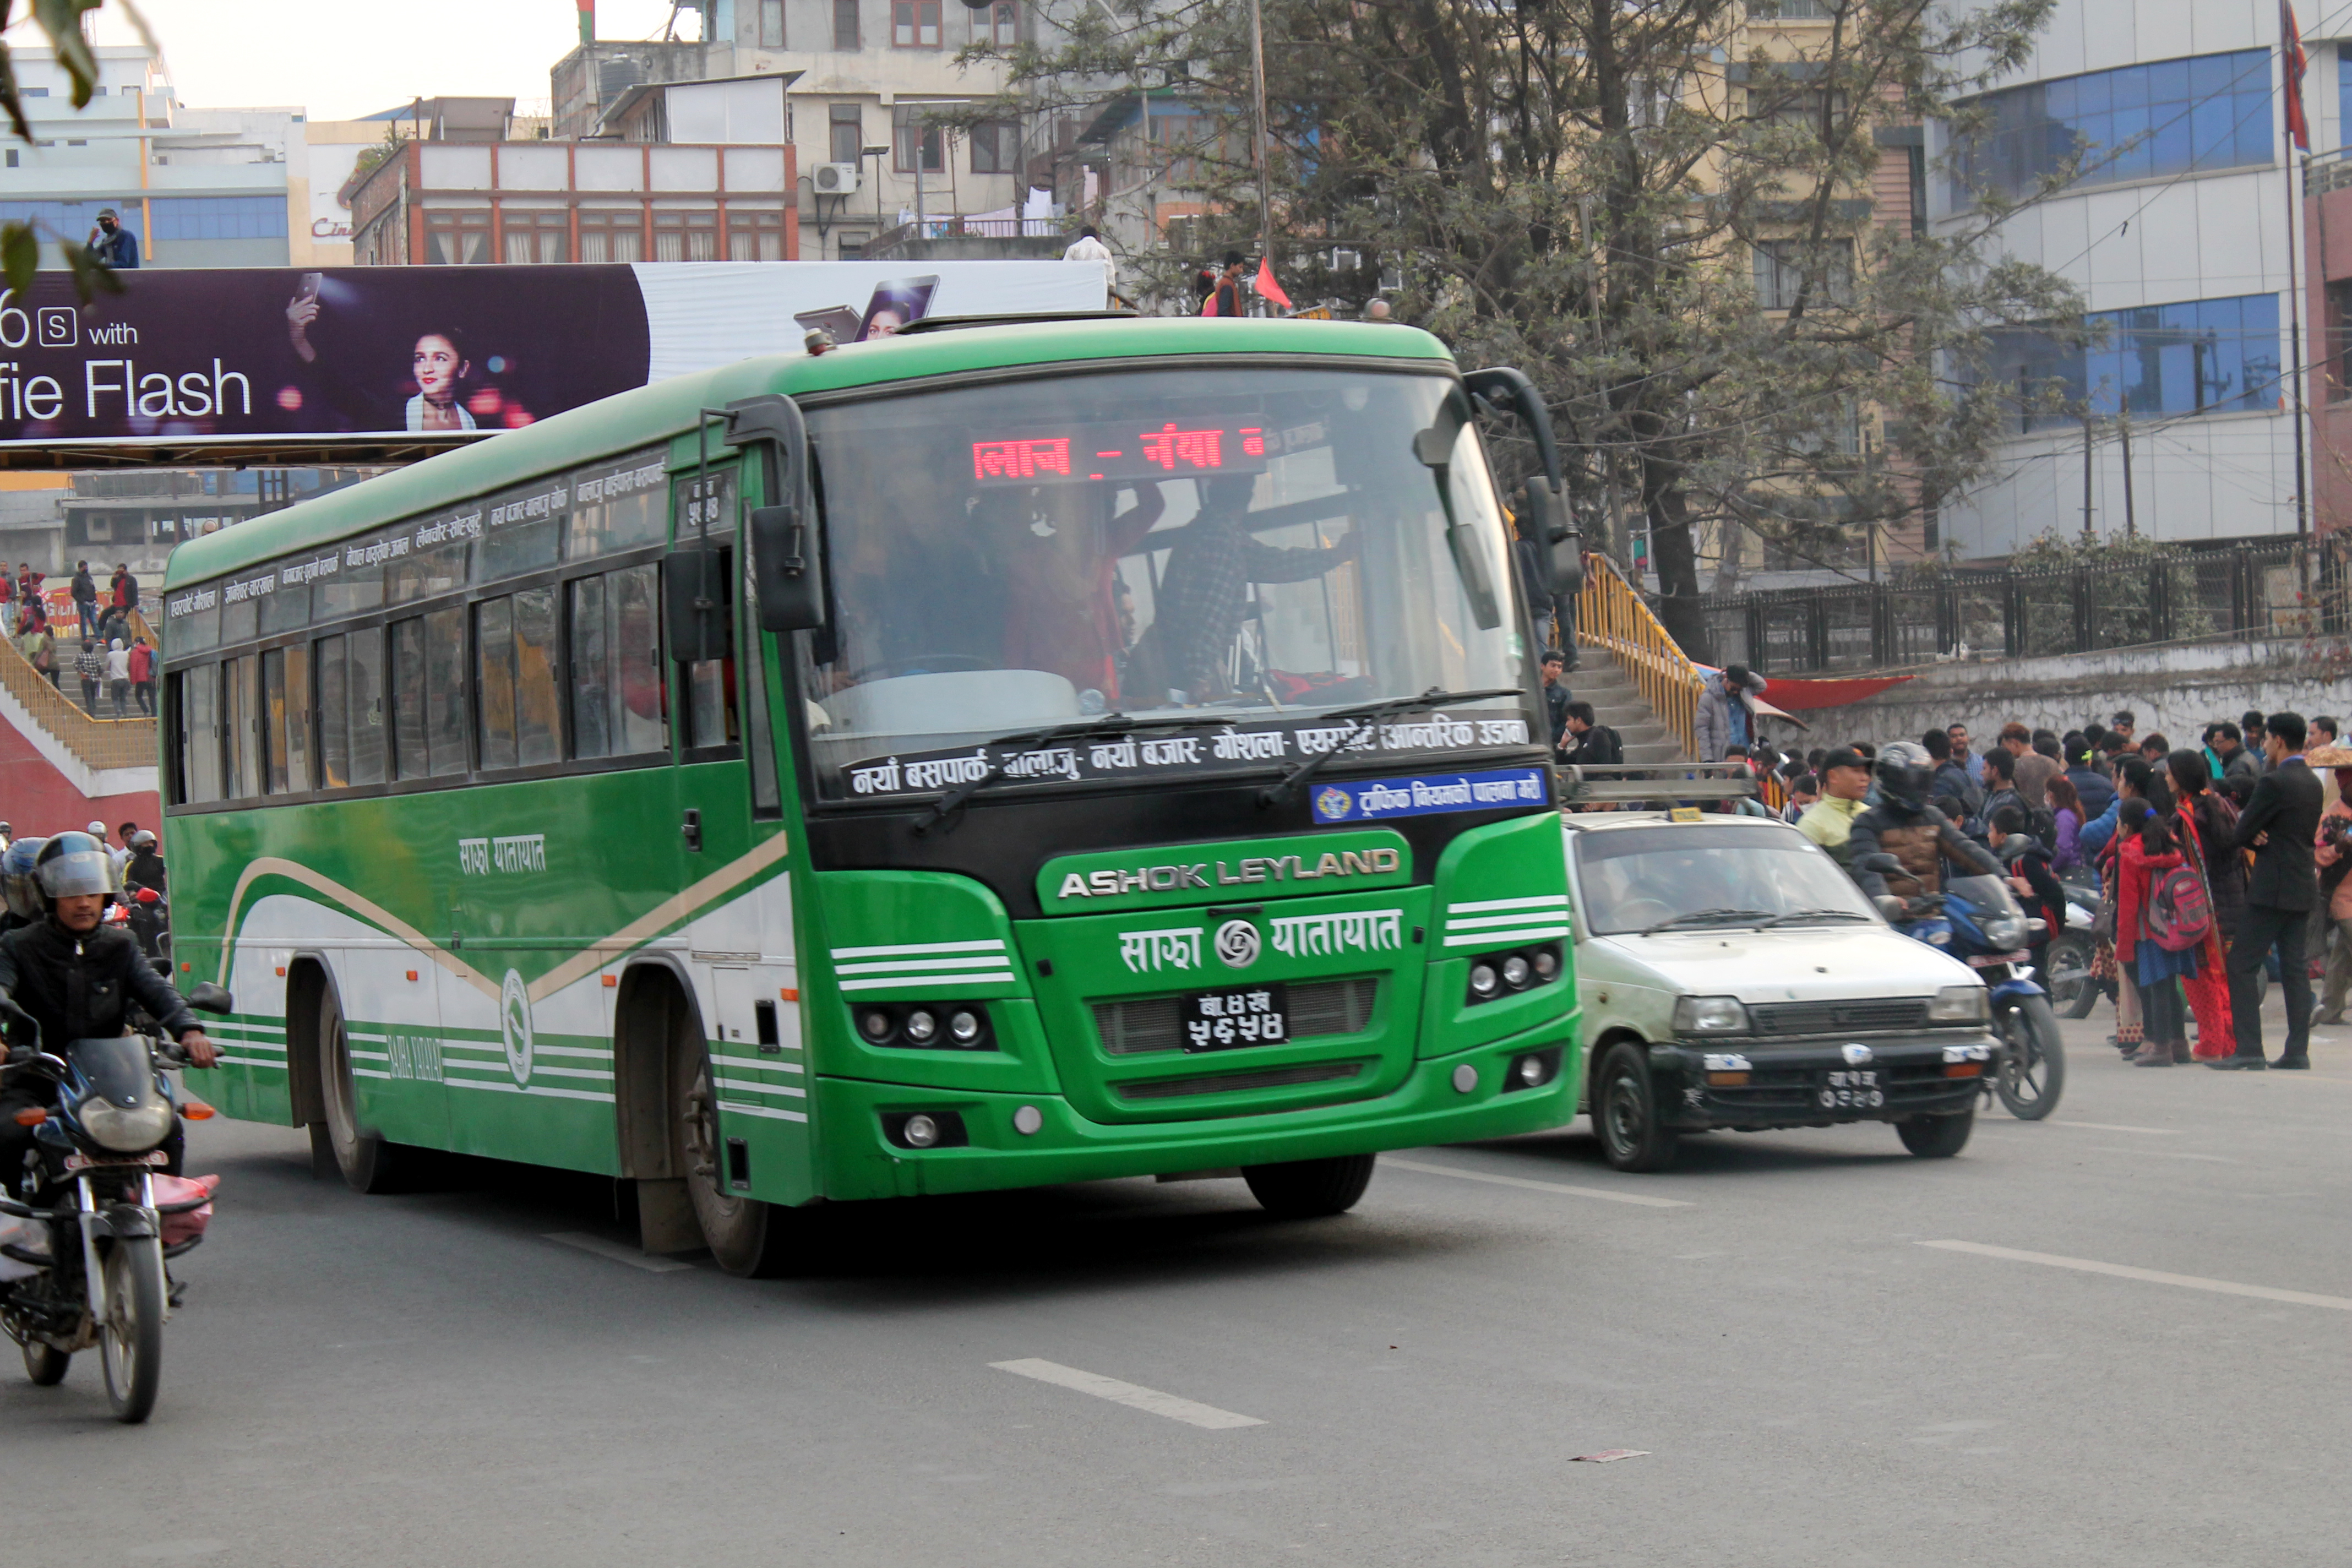 Ground Transportation in Nepal